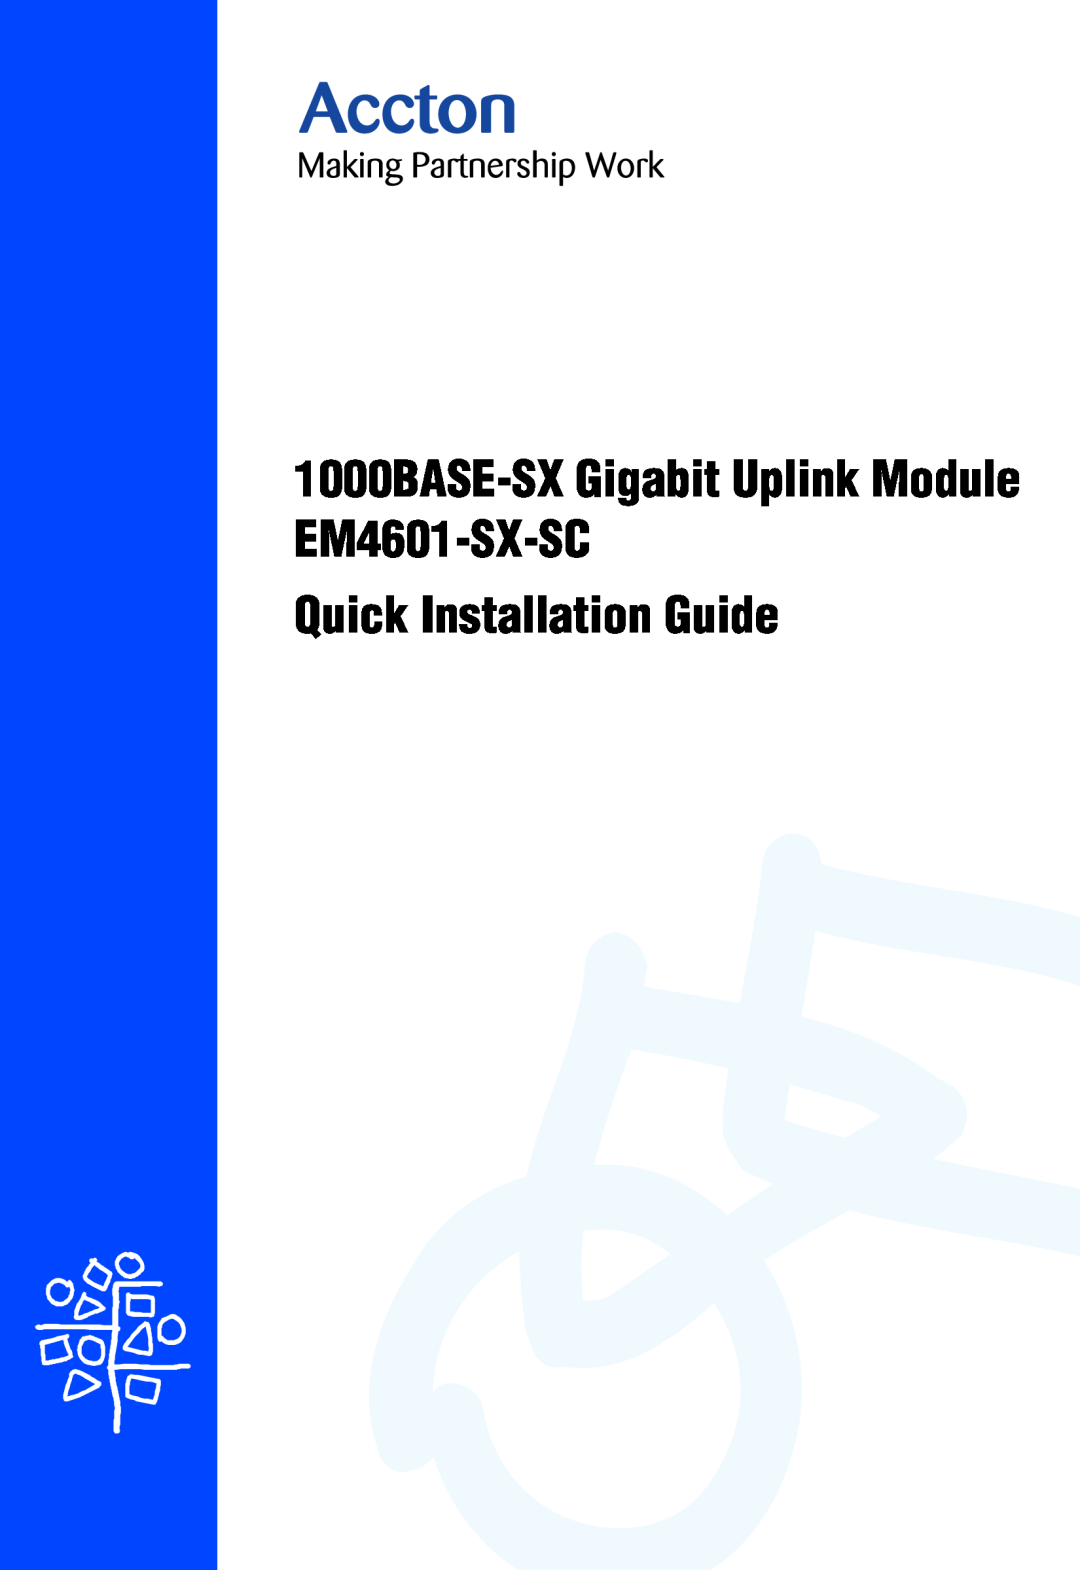 Accton Technology E062000-R01 manual 1000BASE-SX Gigabit Uplink Module EM4601-SX-SC, Quick Installation Guide 